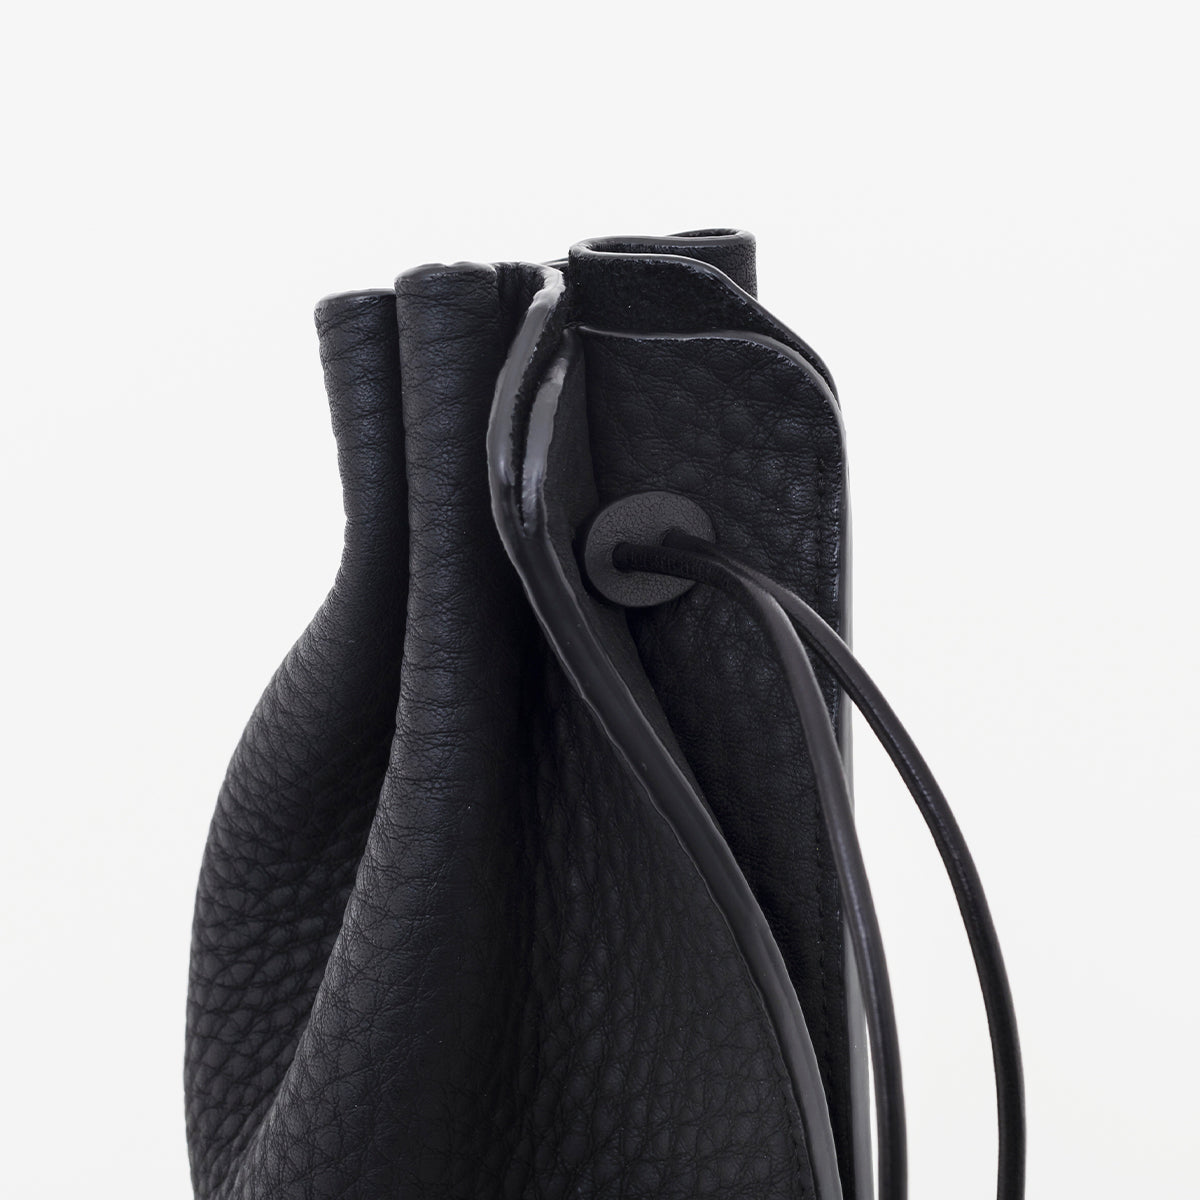 ITTI (イッチ) | HERRIE KINCHAKU POUCH - PM / DIPLO SKY(ヘリー キンチャクポーチ - ピーエム / ディプロスカイ)レザー 巾着 バッグ カバン 鞄 かばん ポーチ 本革